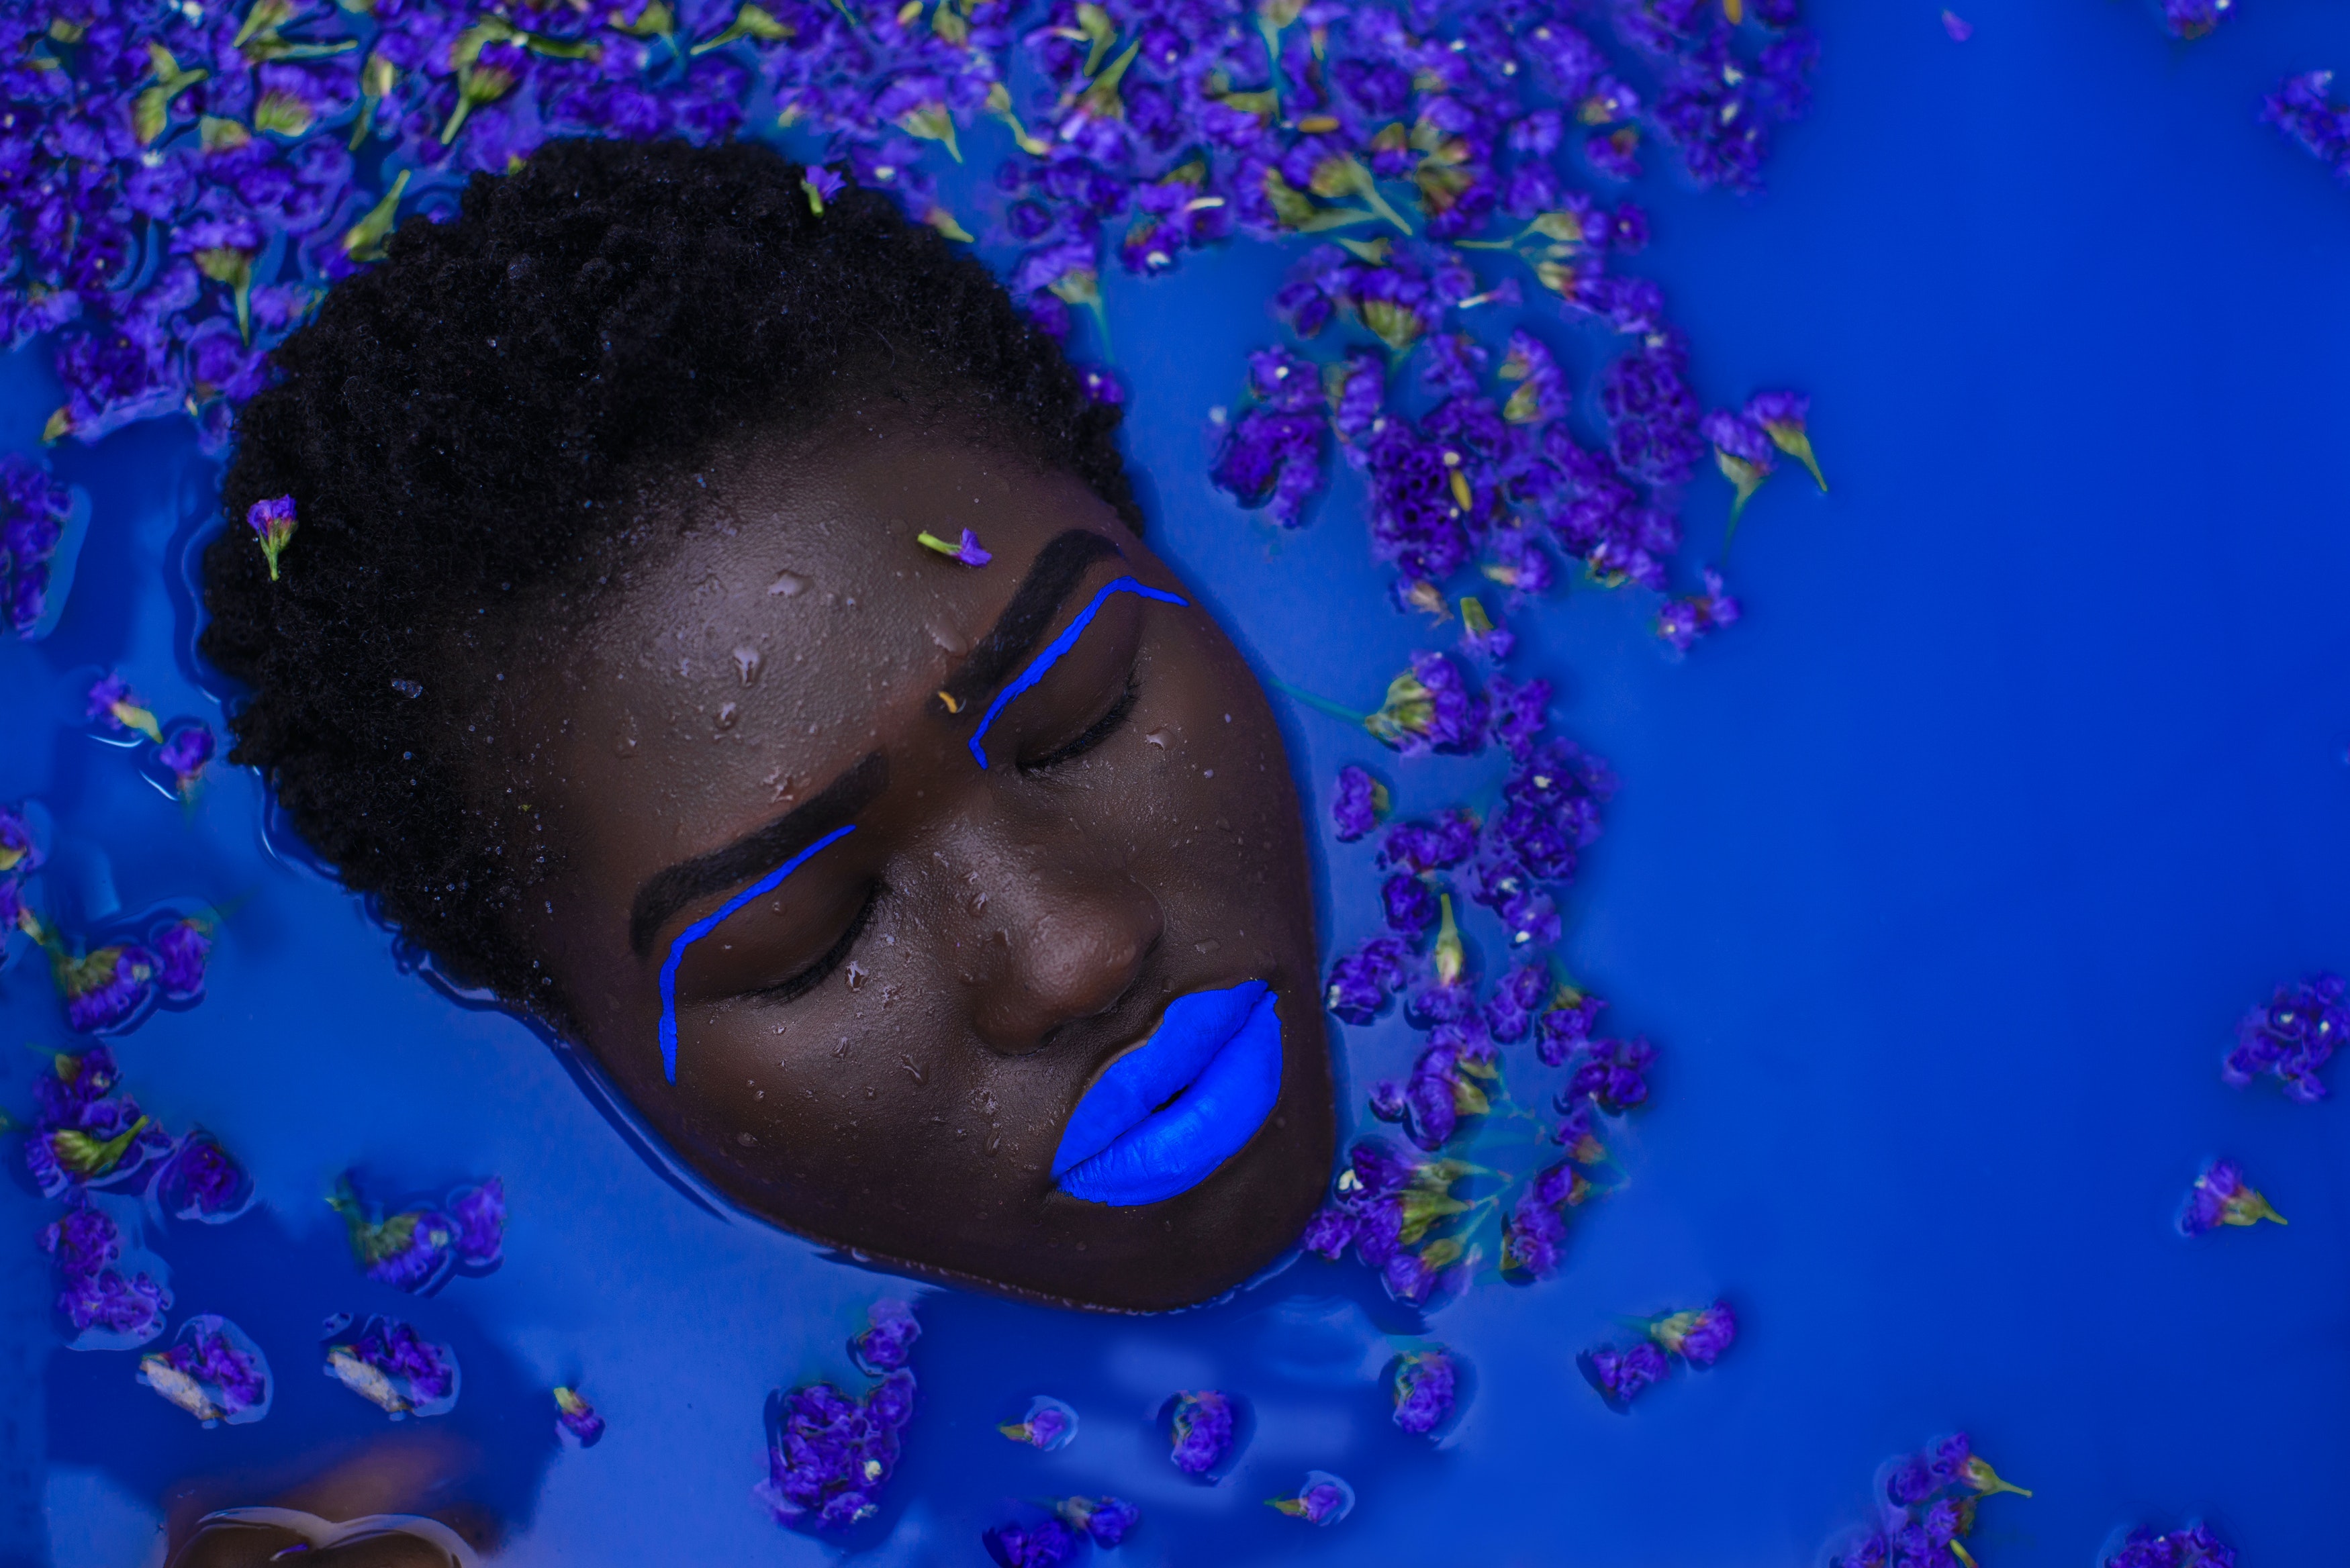 A woman bathing in blue liquid. │ Source: Pexels